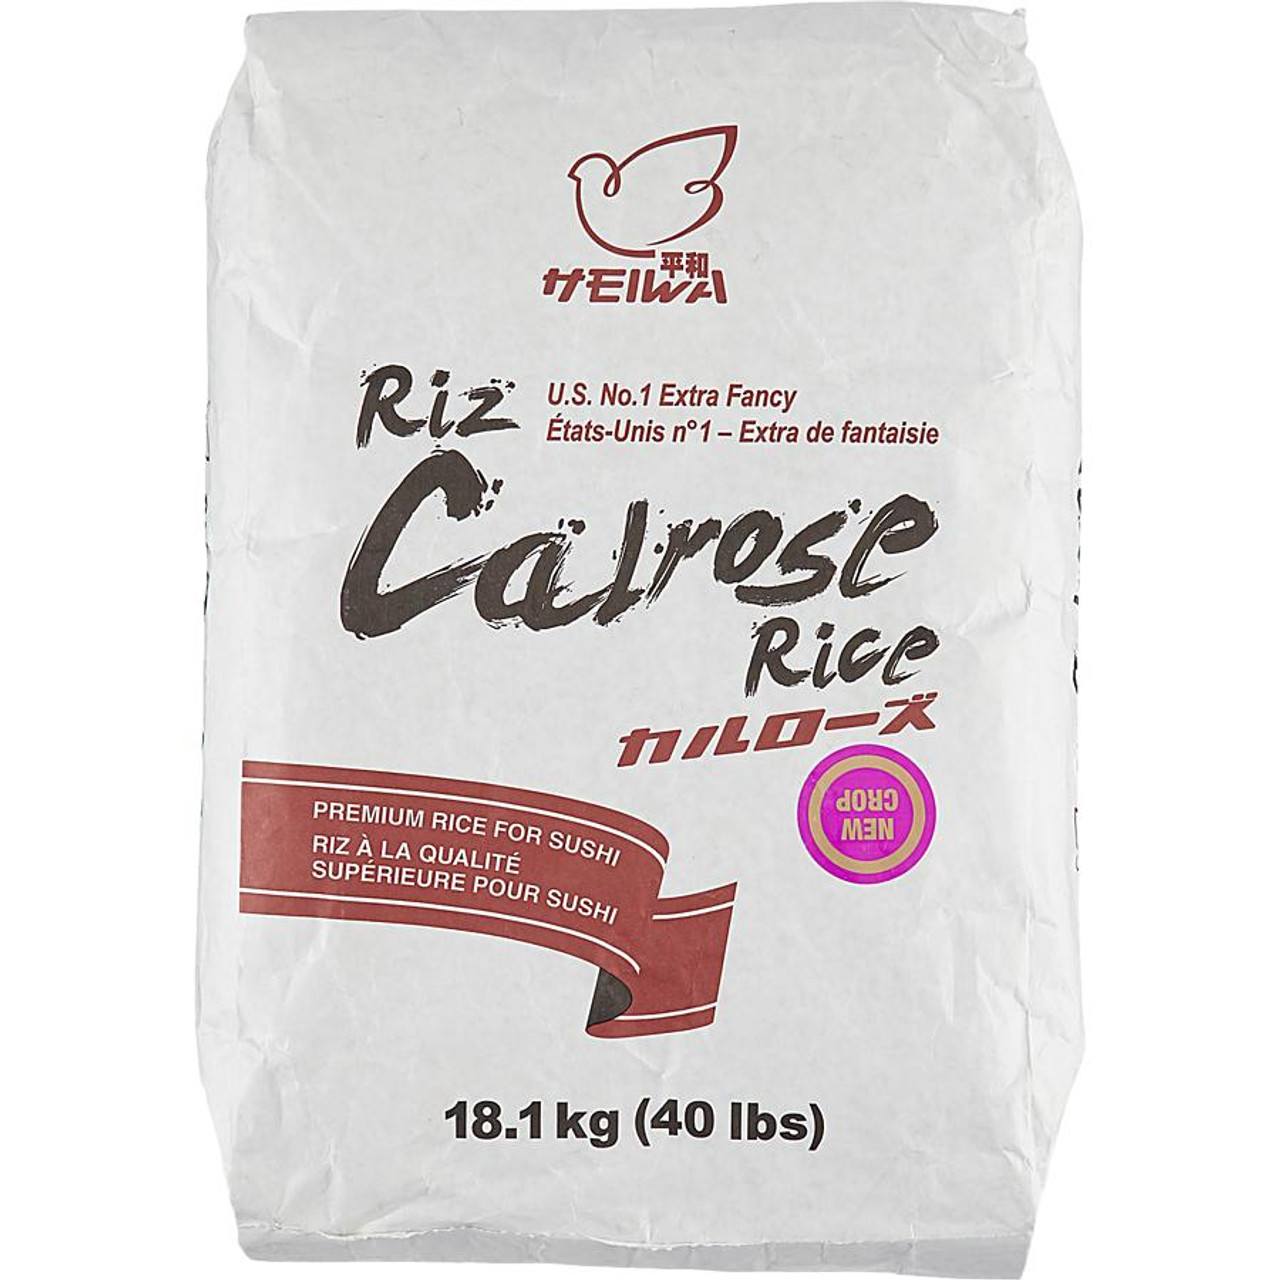  Heiwa Calrose Premium Sushi Rice | Bulk Food Service | 18.1 kg/39 Lbs 